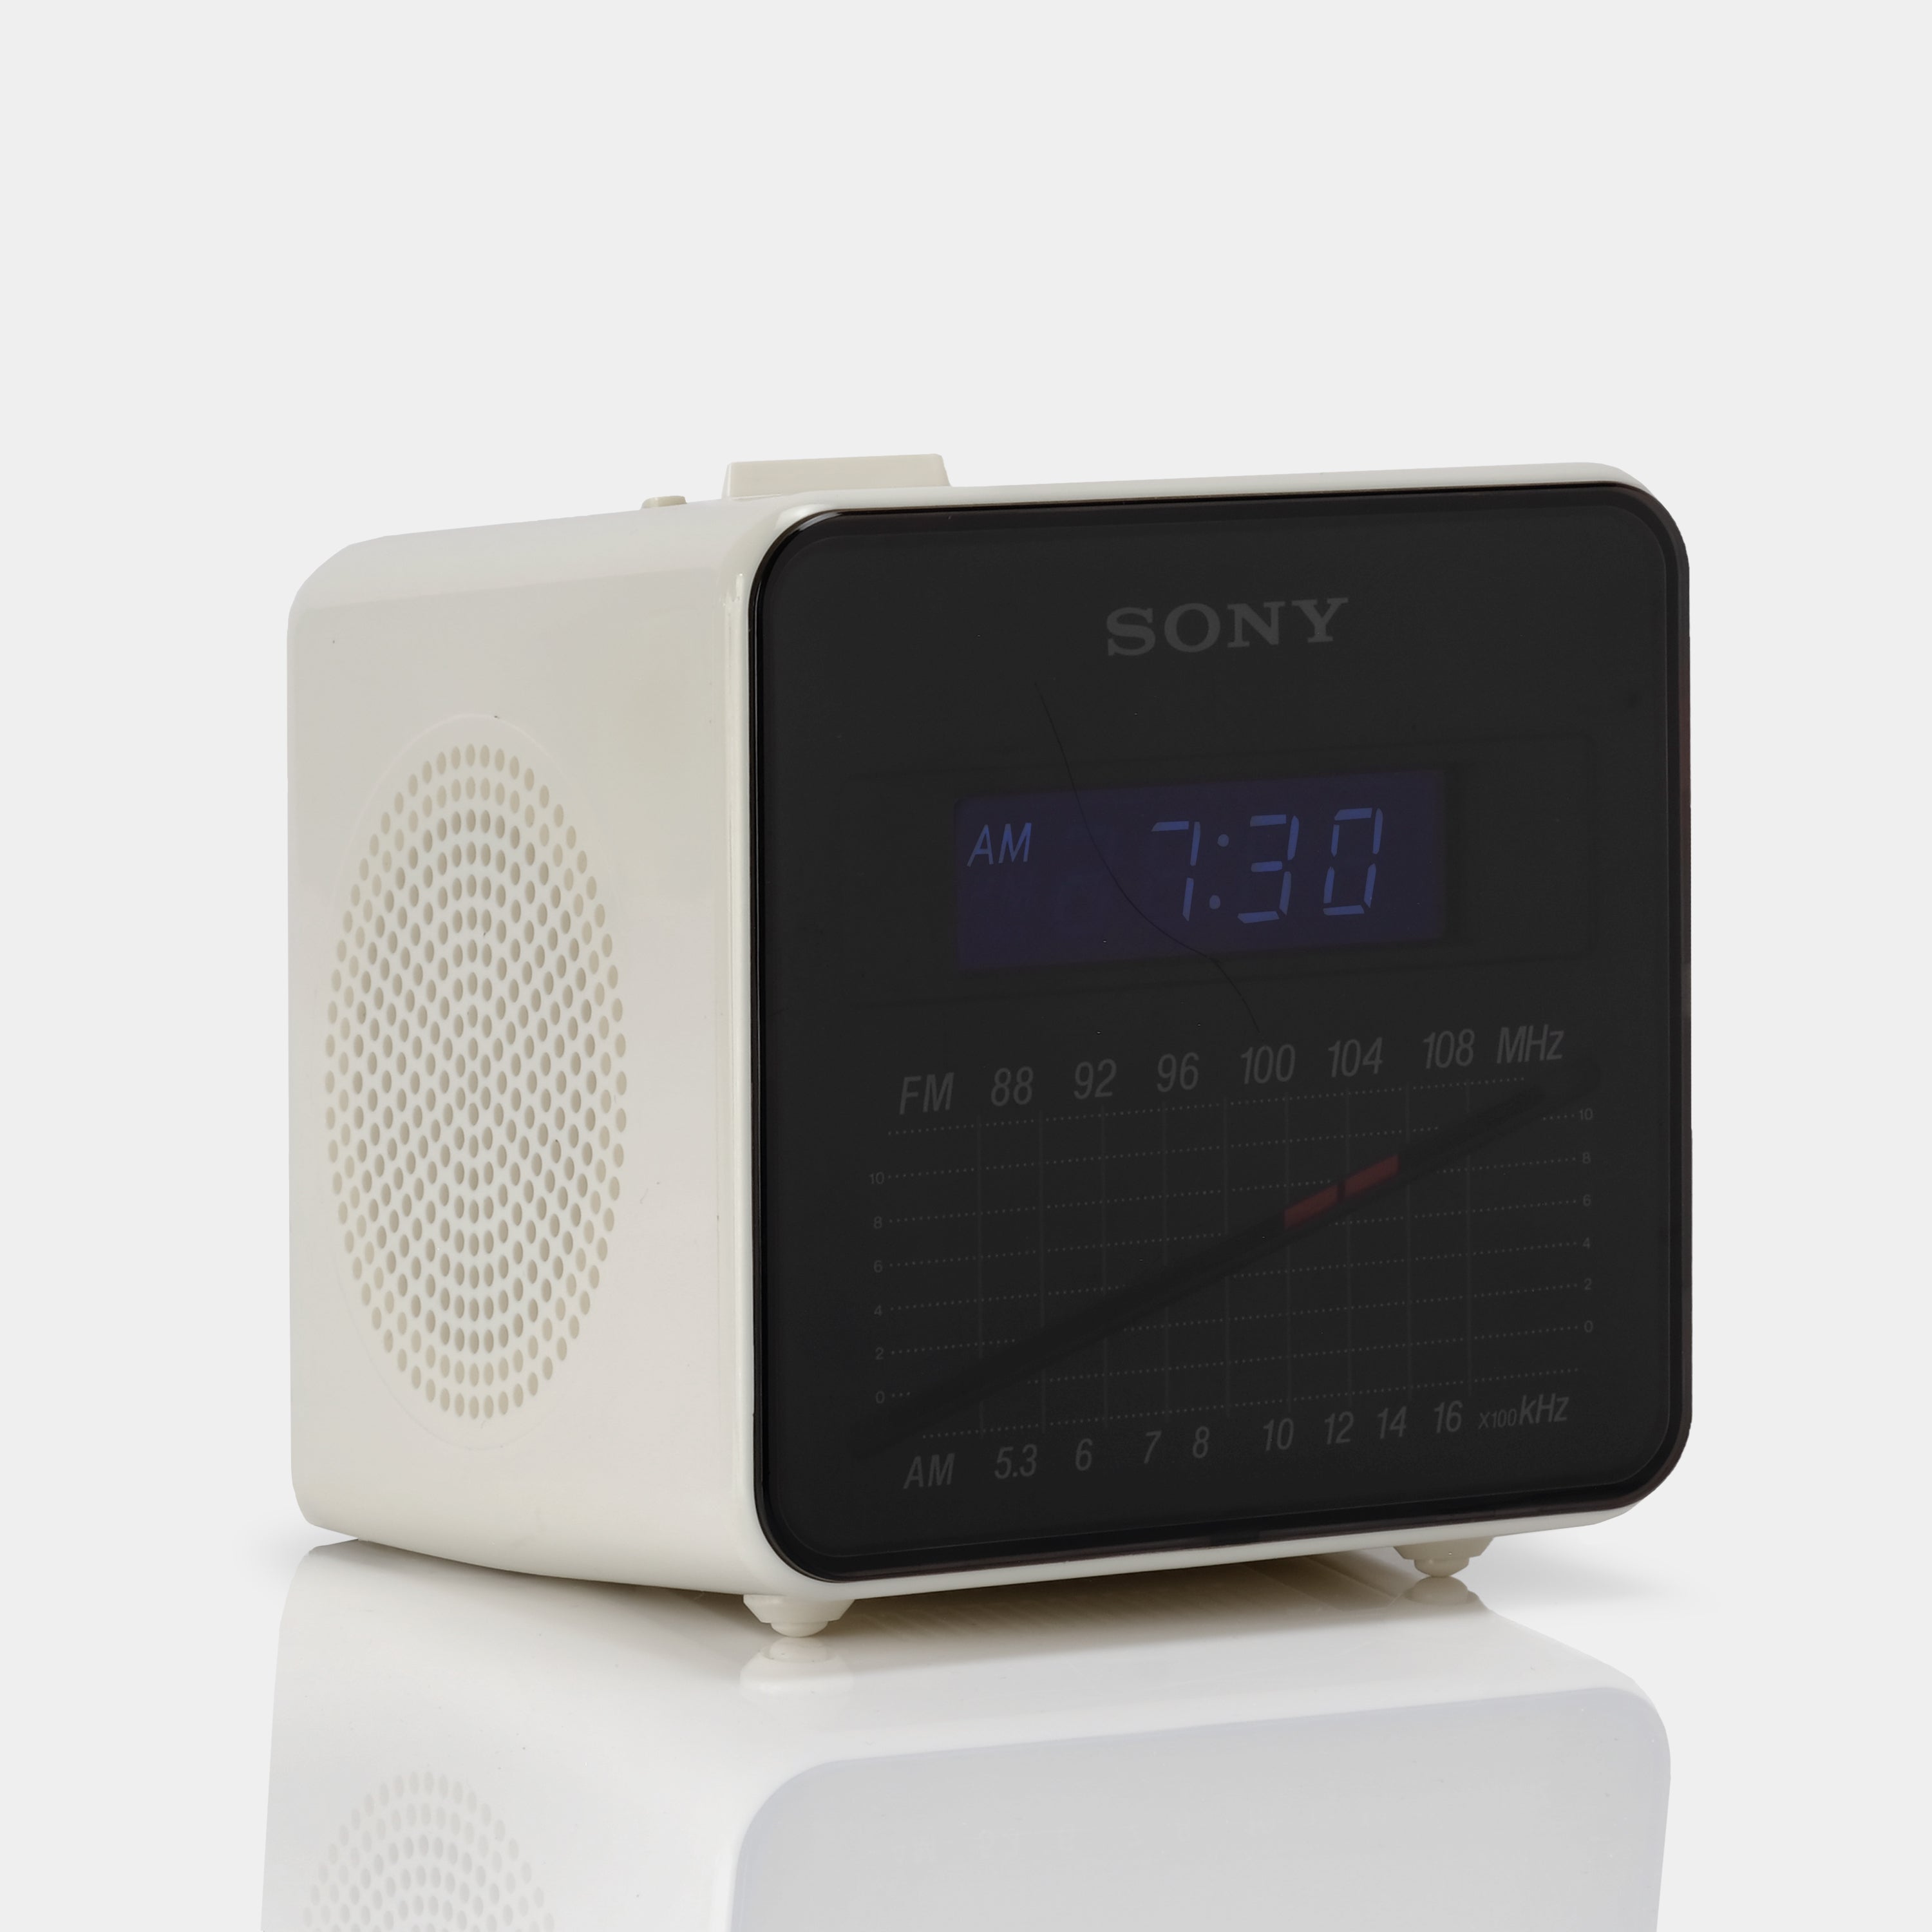 Sony Dream Machine ICF-C10W Alarm Clock and Radio